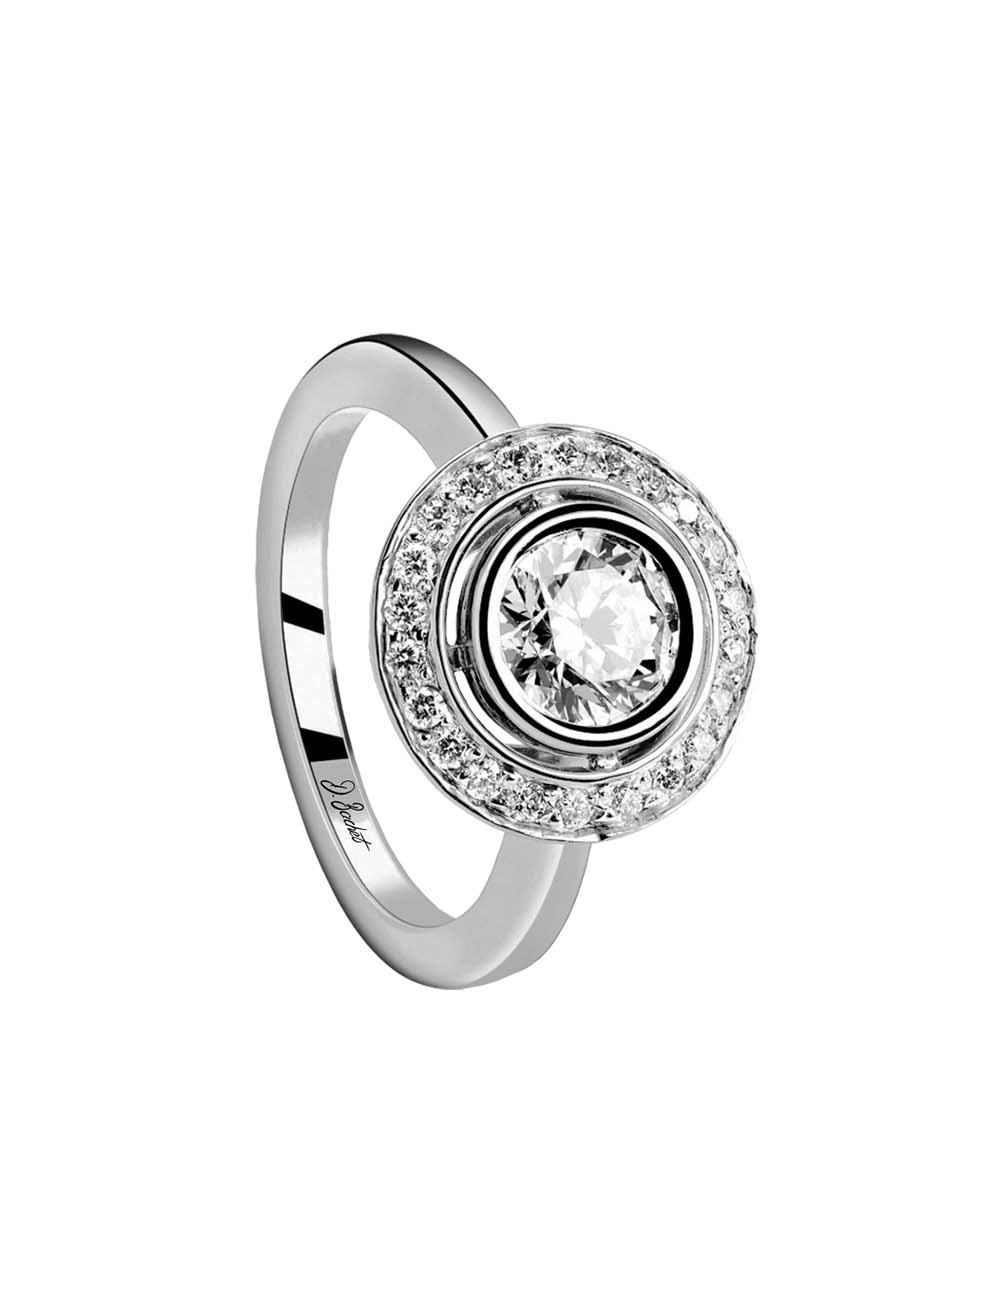 Stunning 1 ct white diamond entourage ring in platinum, halo setting - click to discover